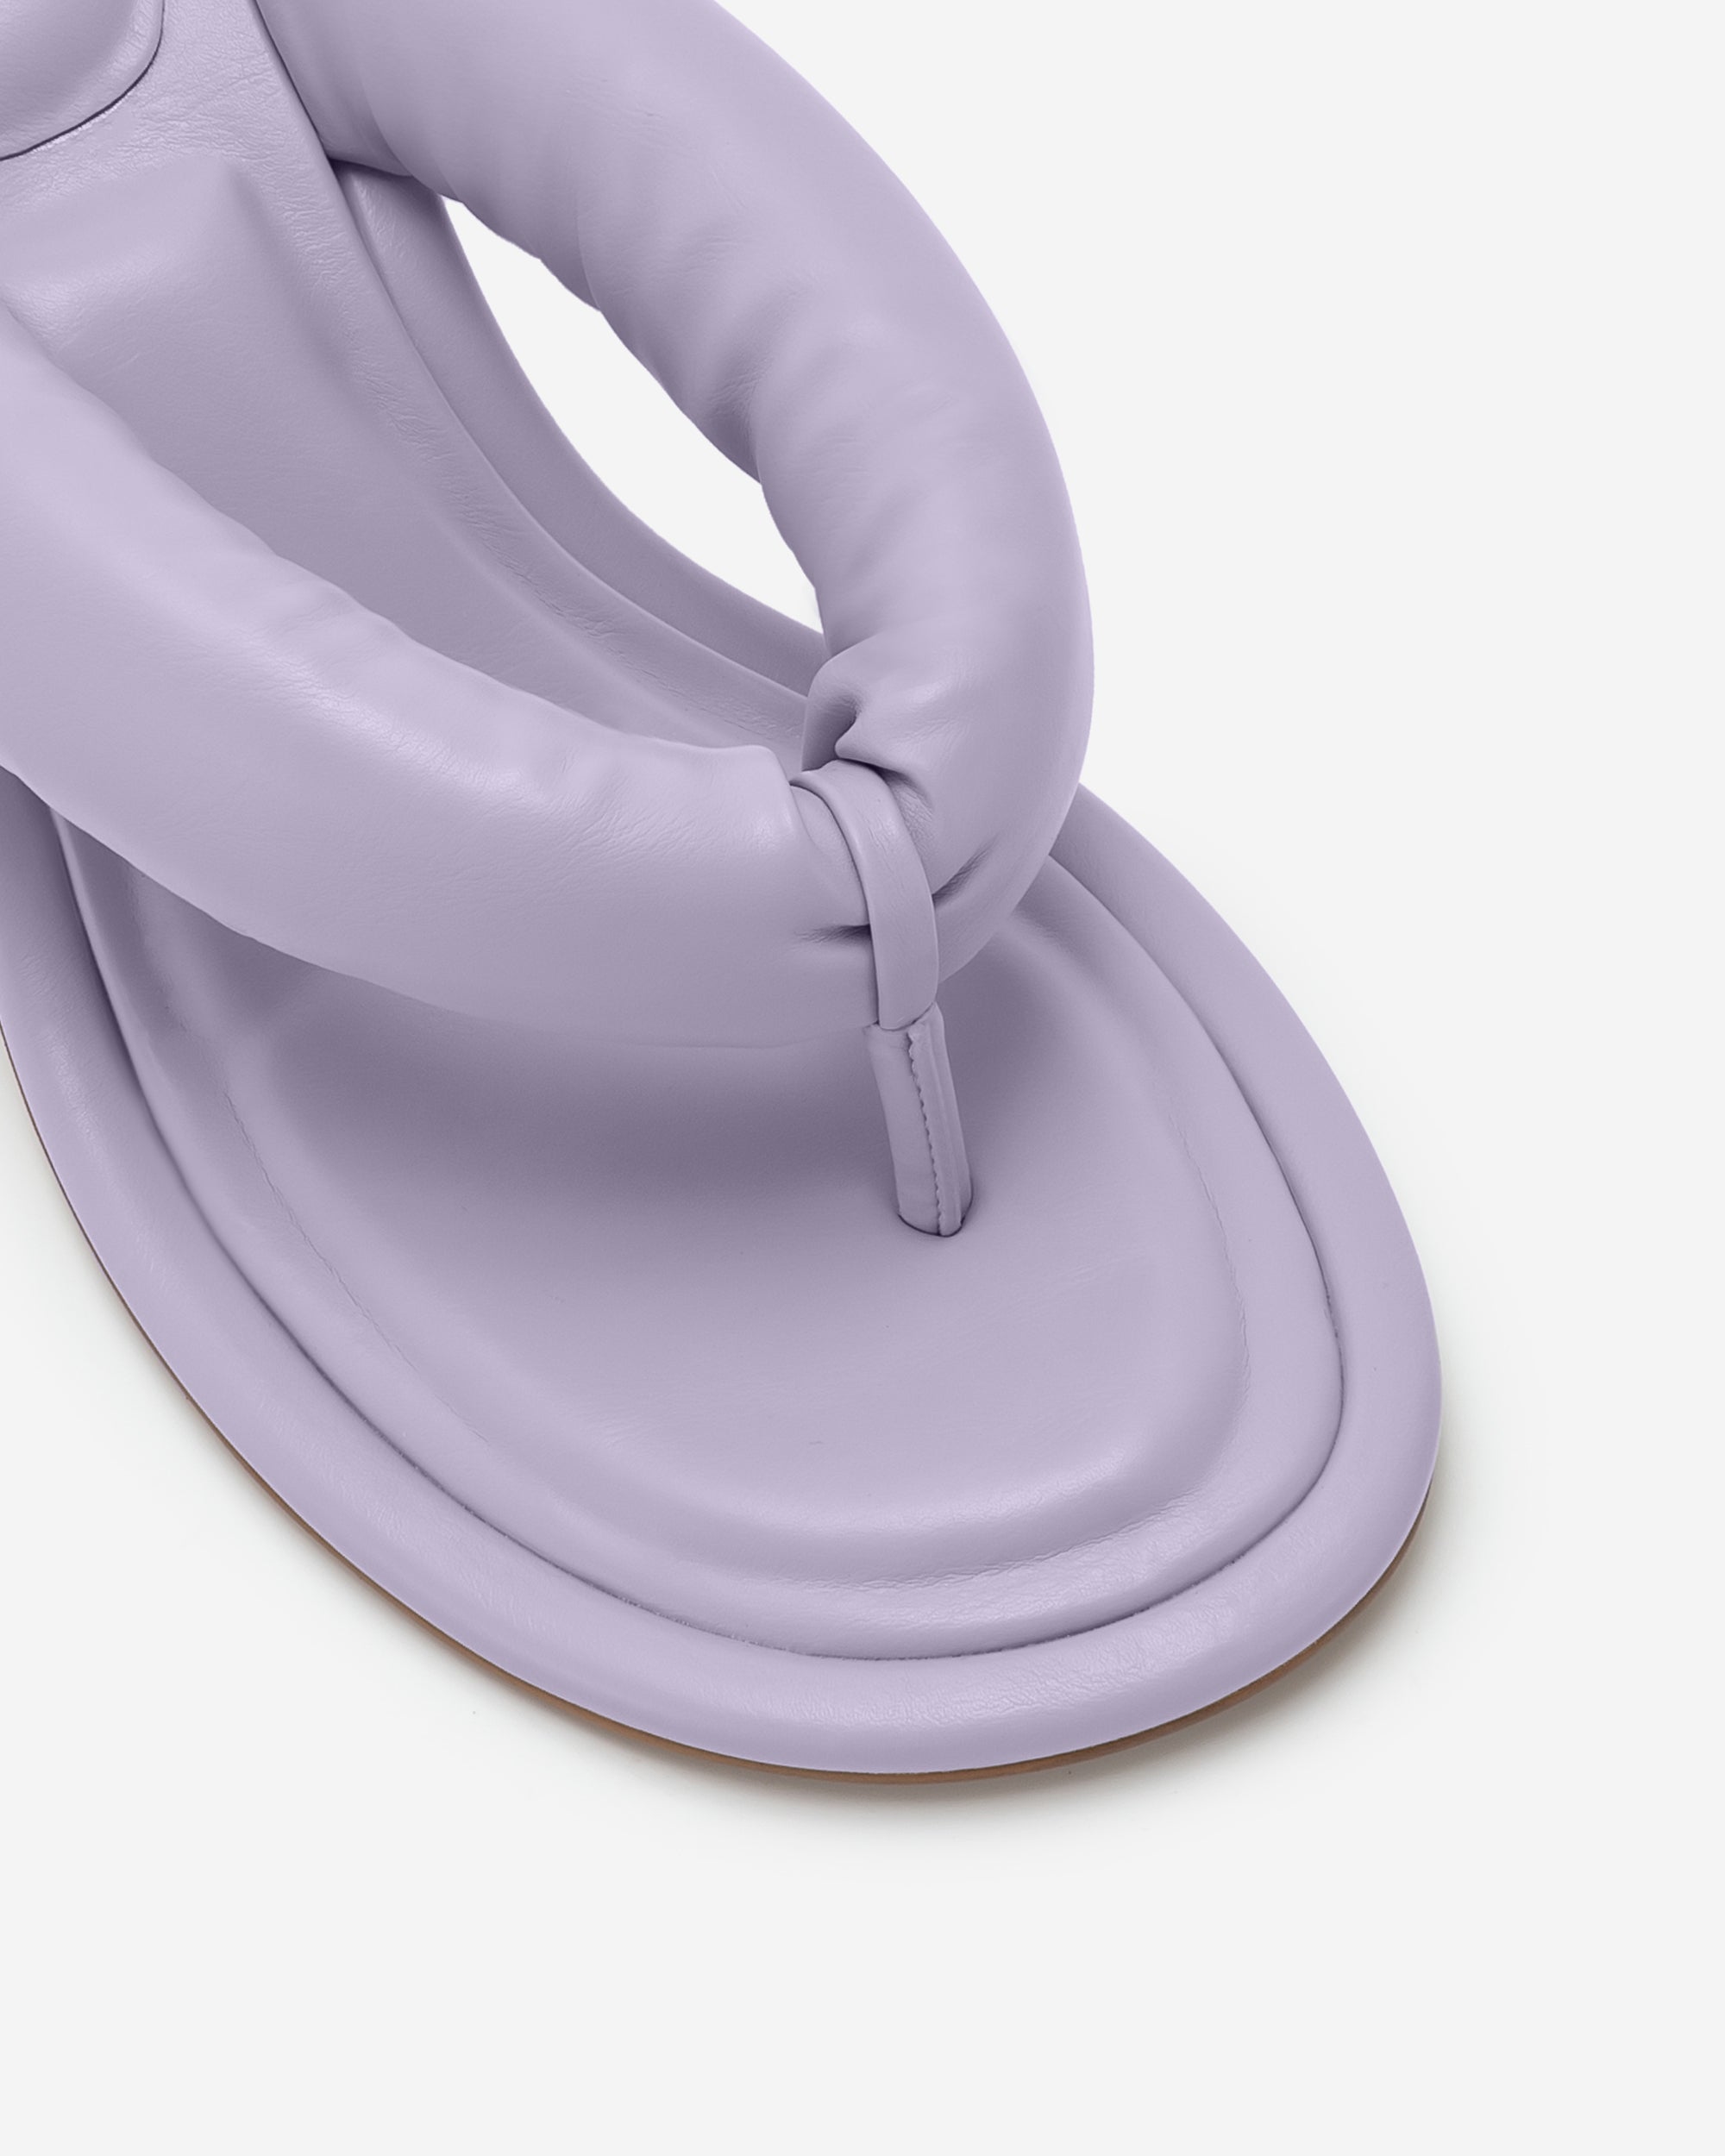 Talia Puffed Sandal - Purple